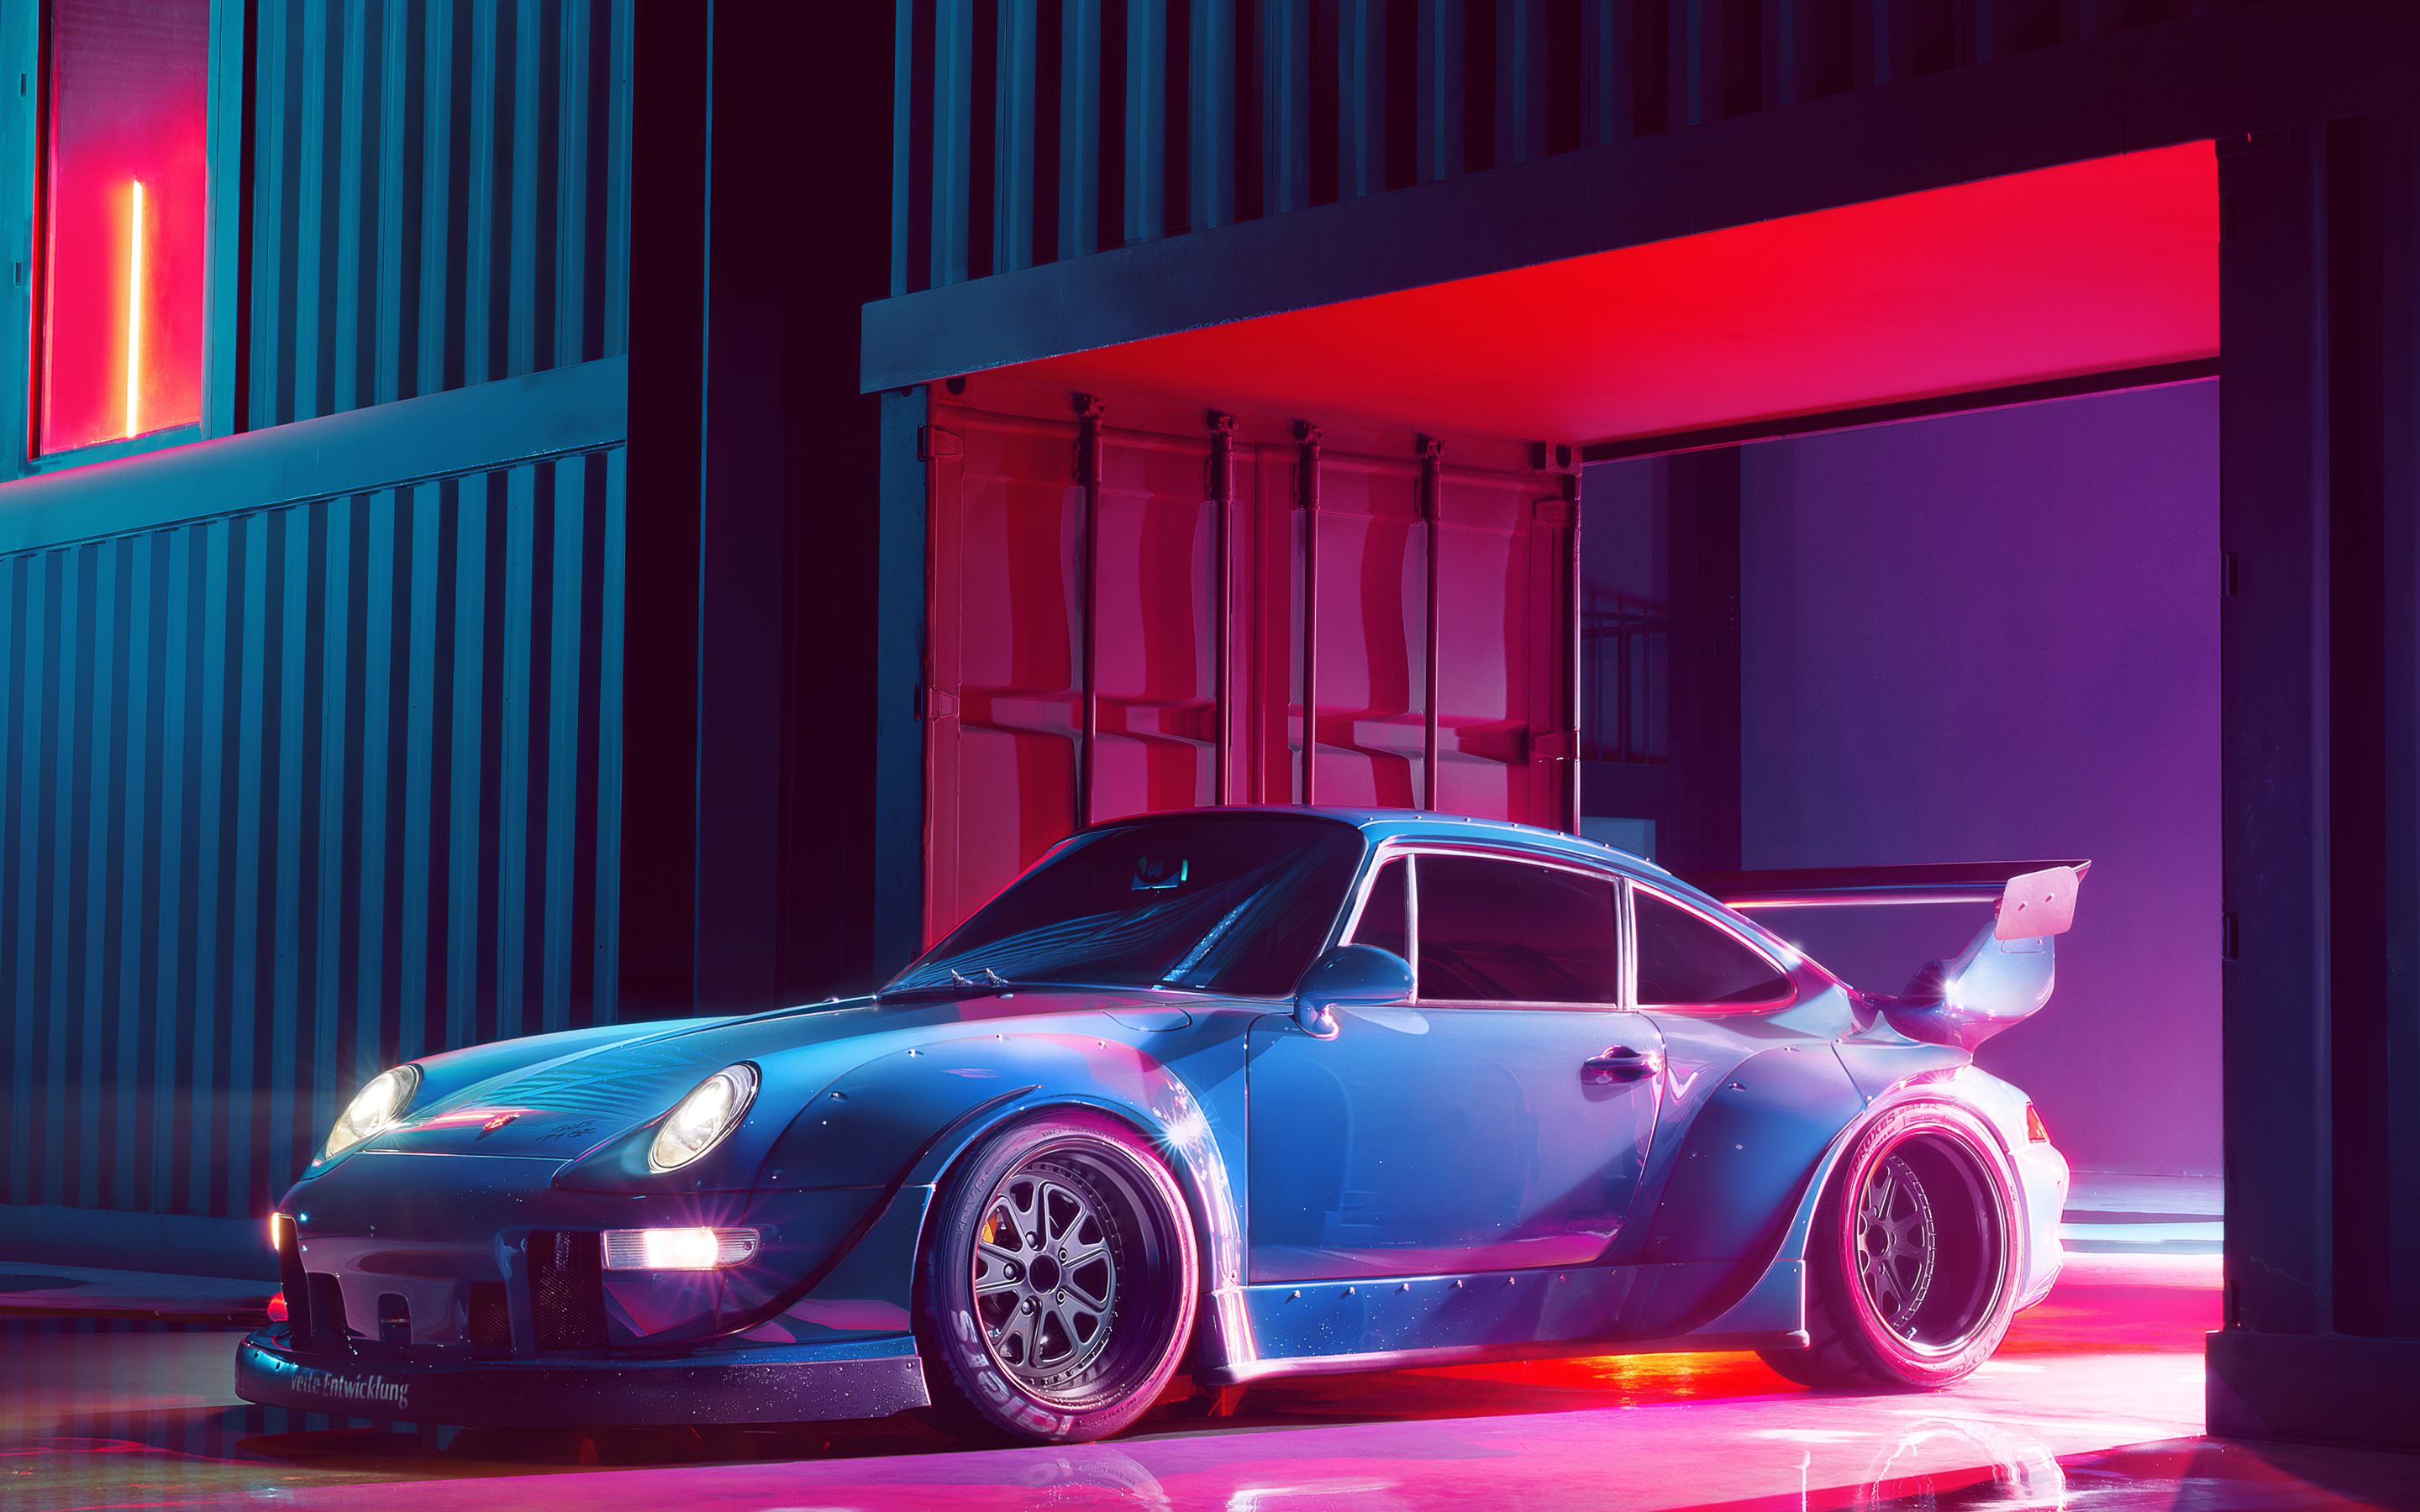 2880x1800 Porsche Rwb Concept 4k Macbook Pro Retina Hd 4k Wallpapers Images Backgrounds Photos And Pictures